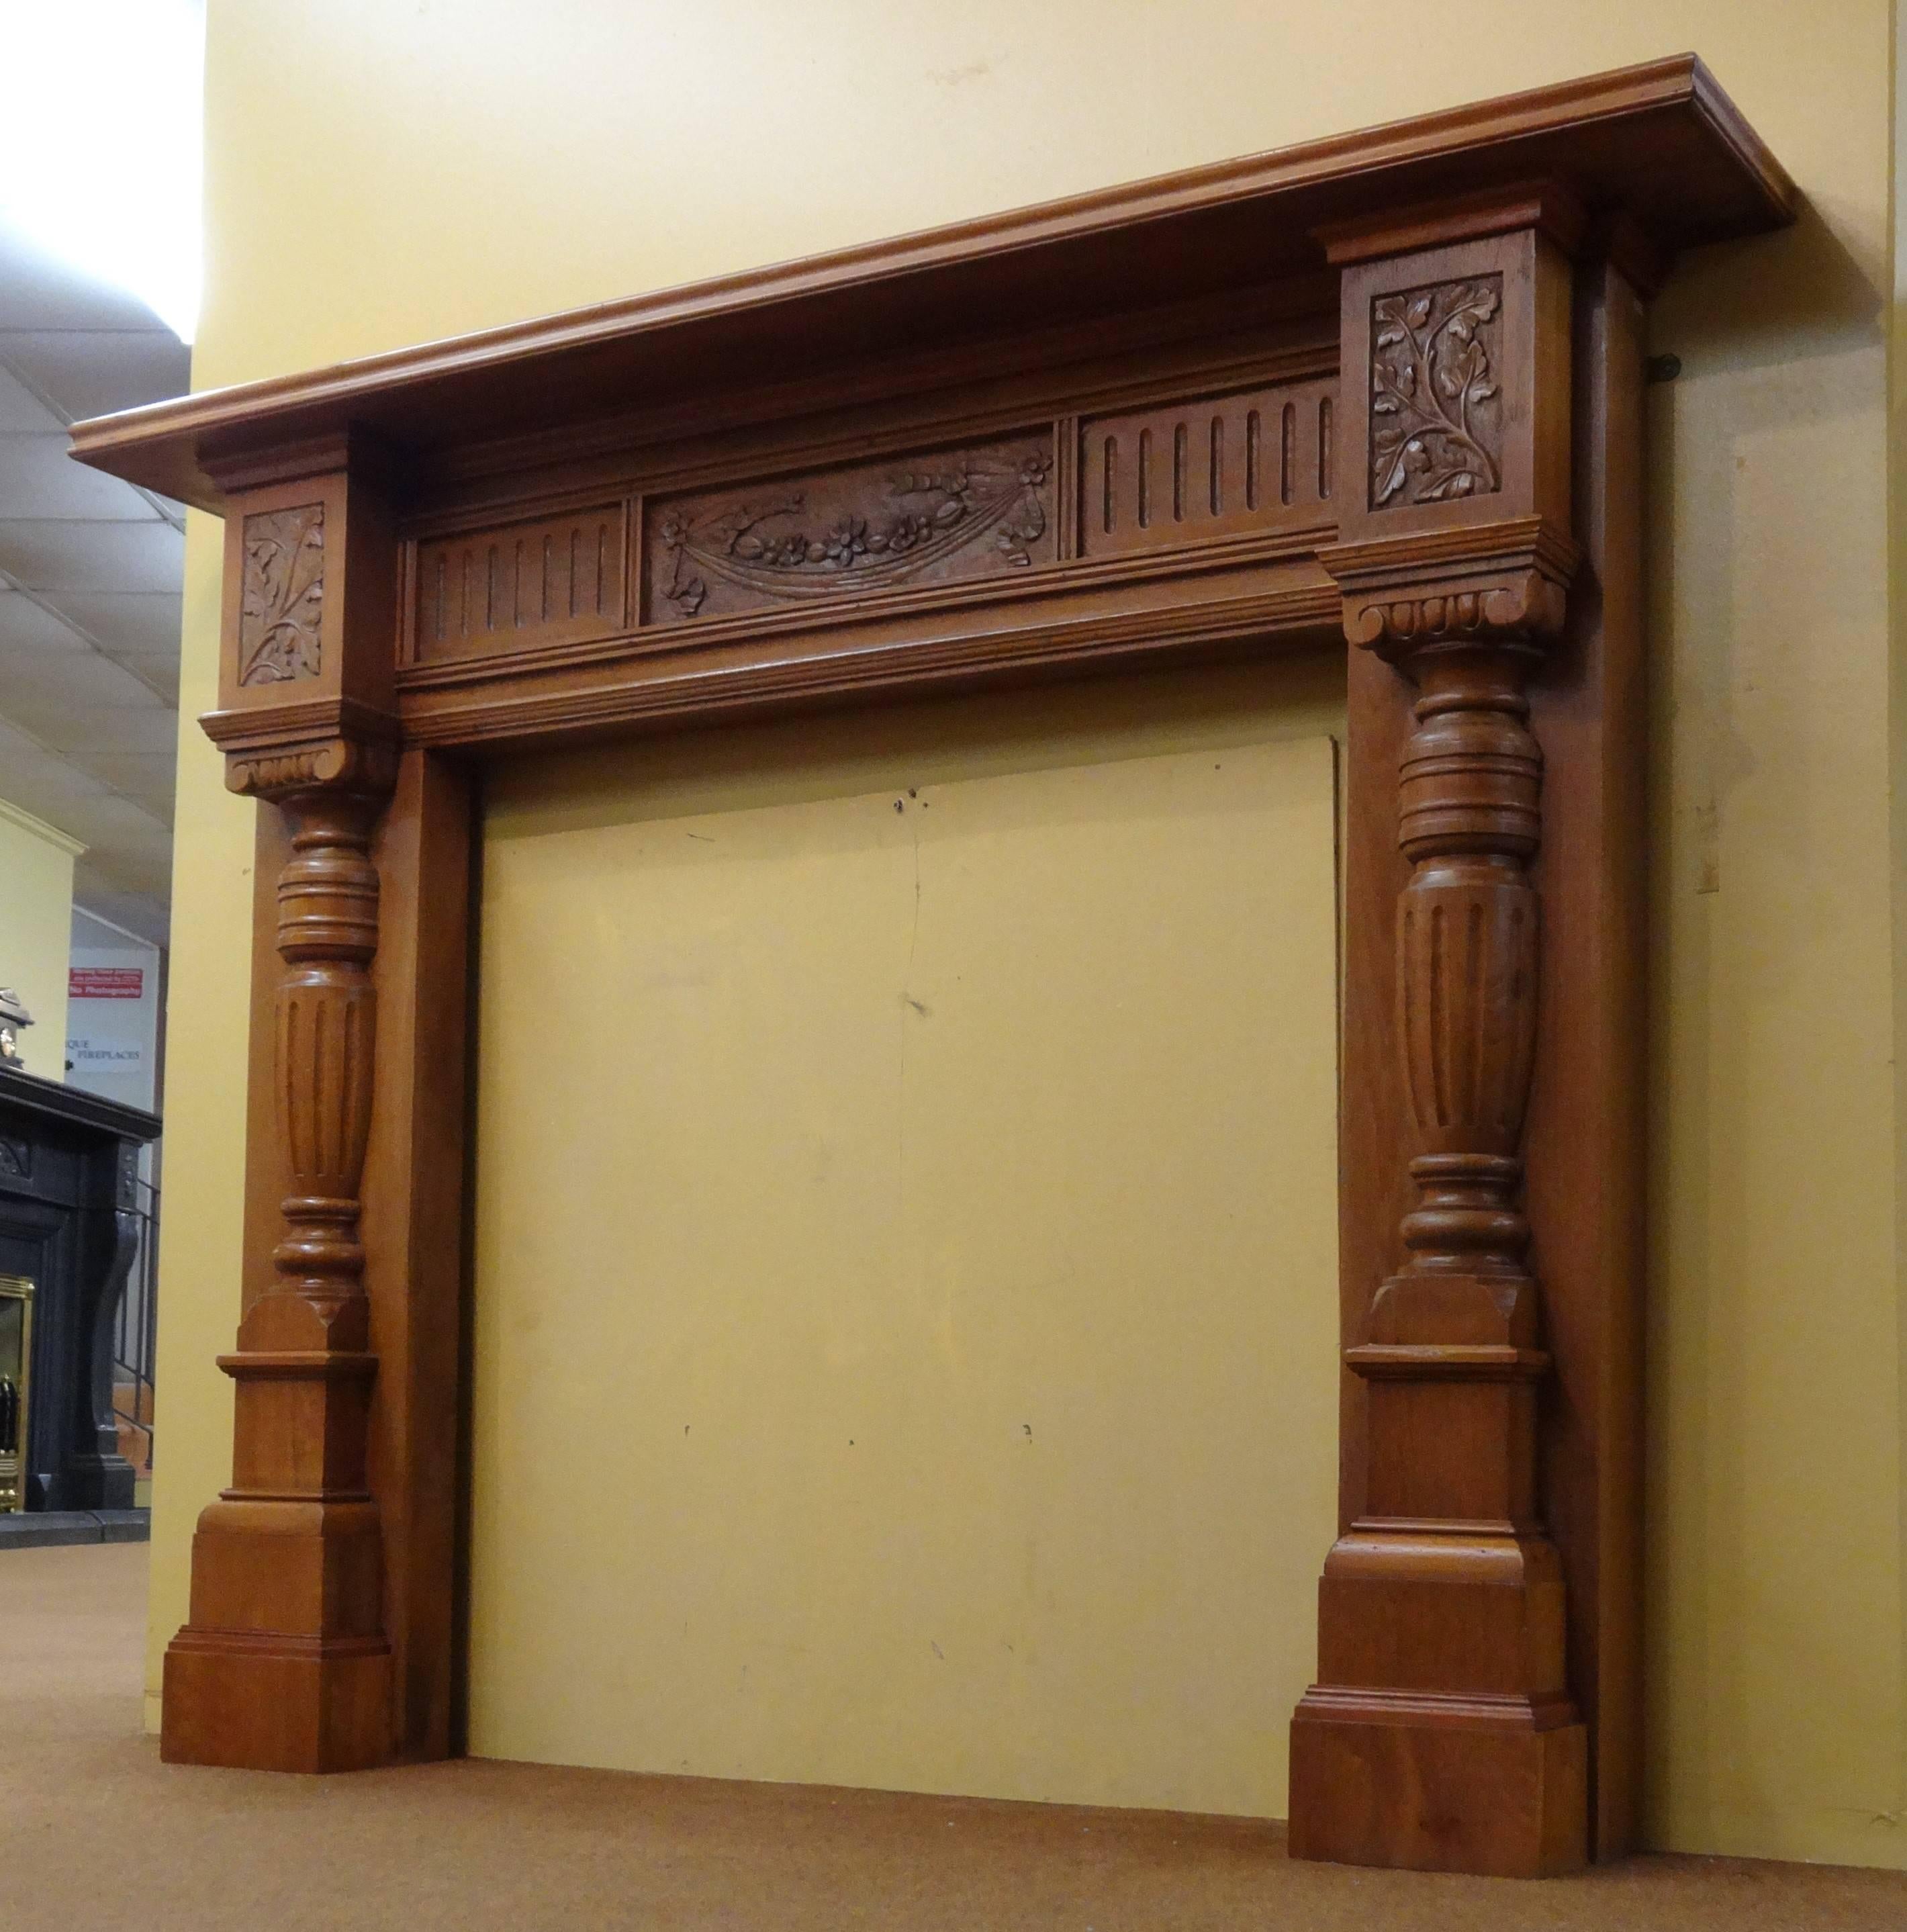 Northern Irish 20th Century Edwardian Carved Mahogany Fireplace Surround For Sale